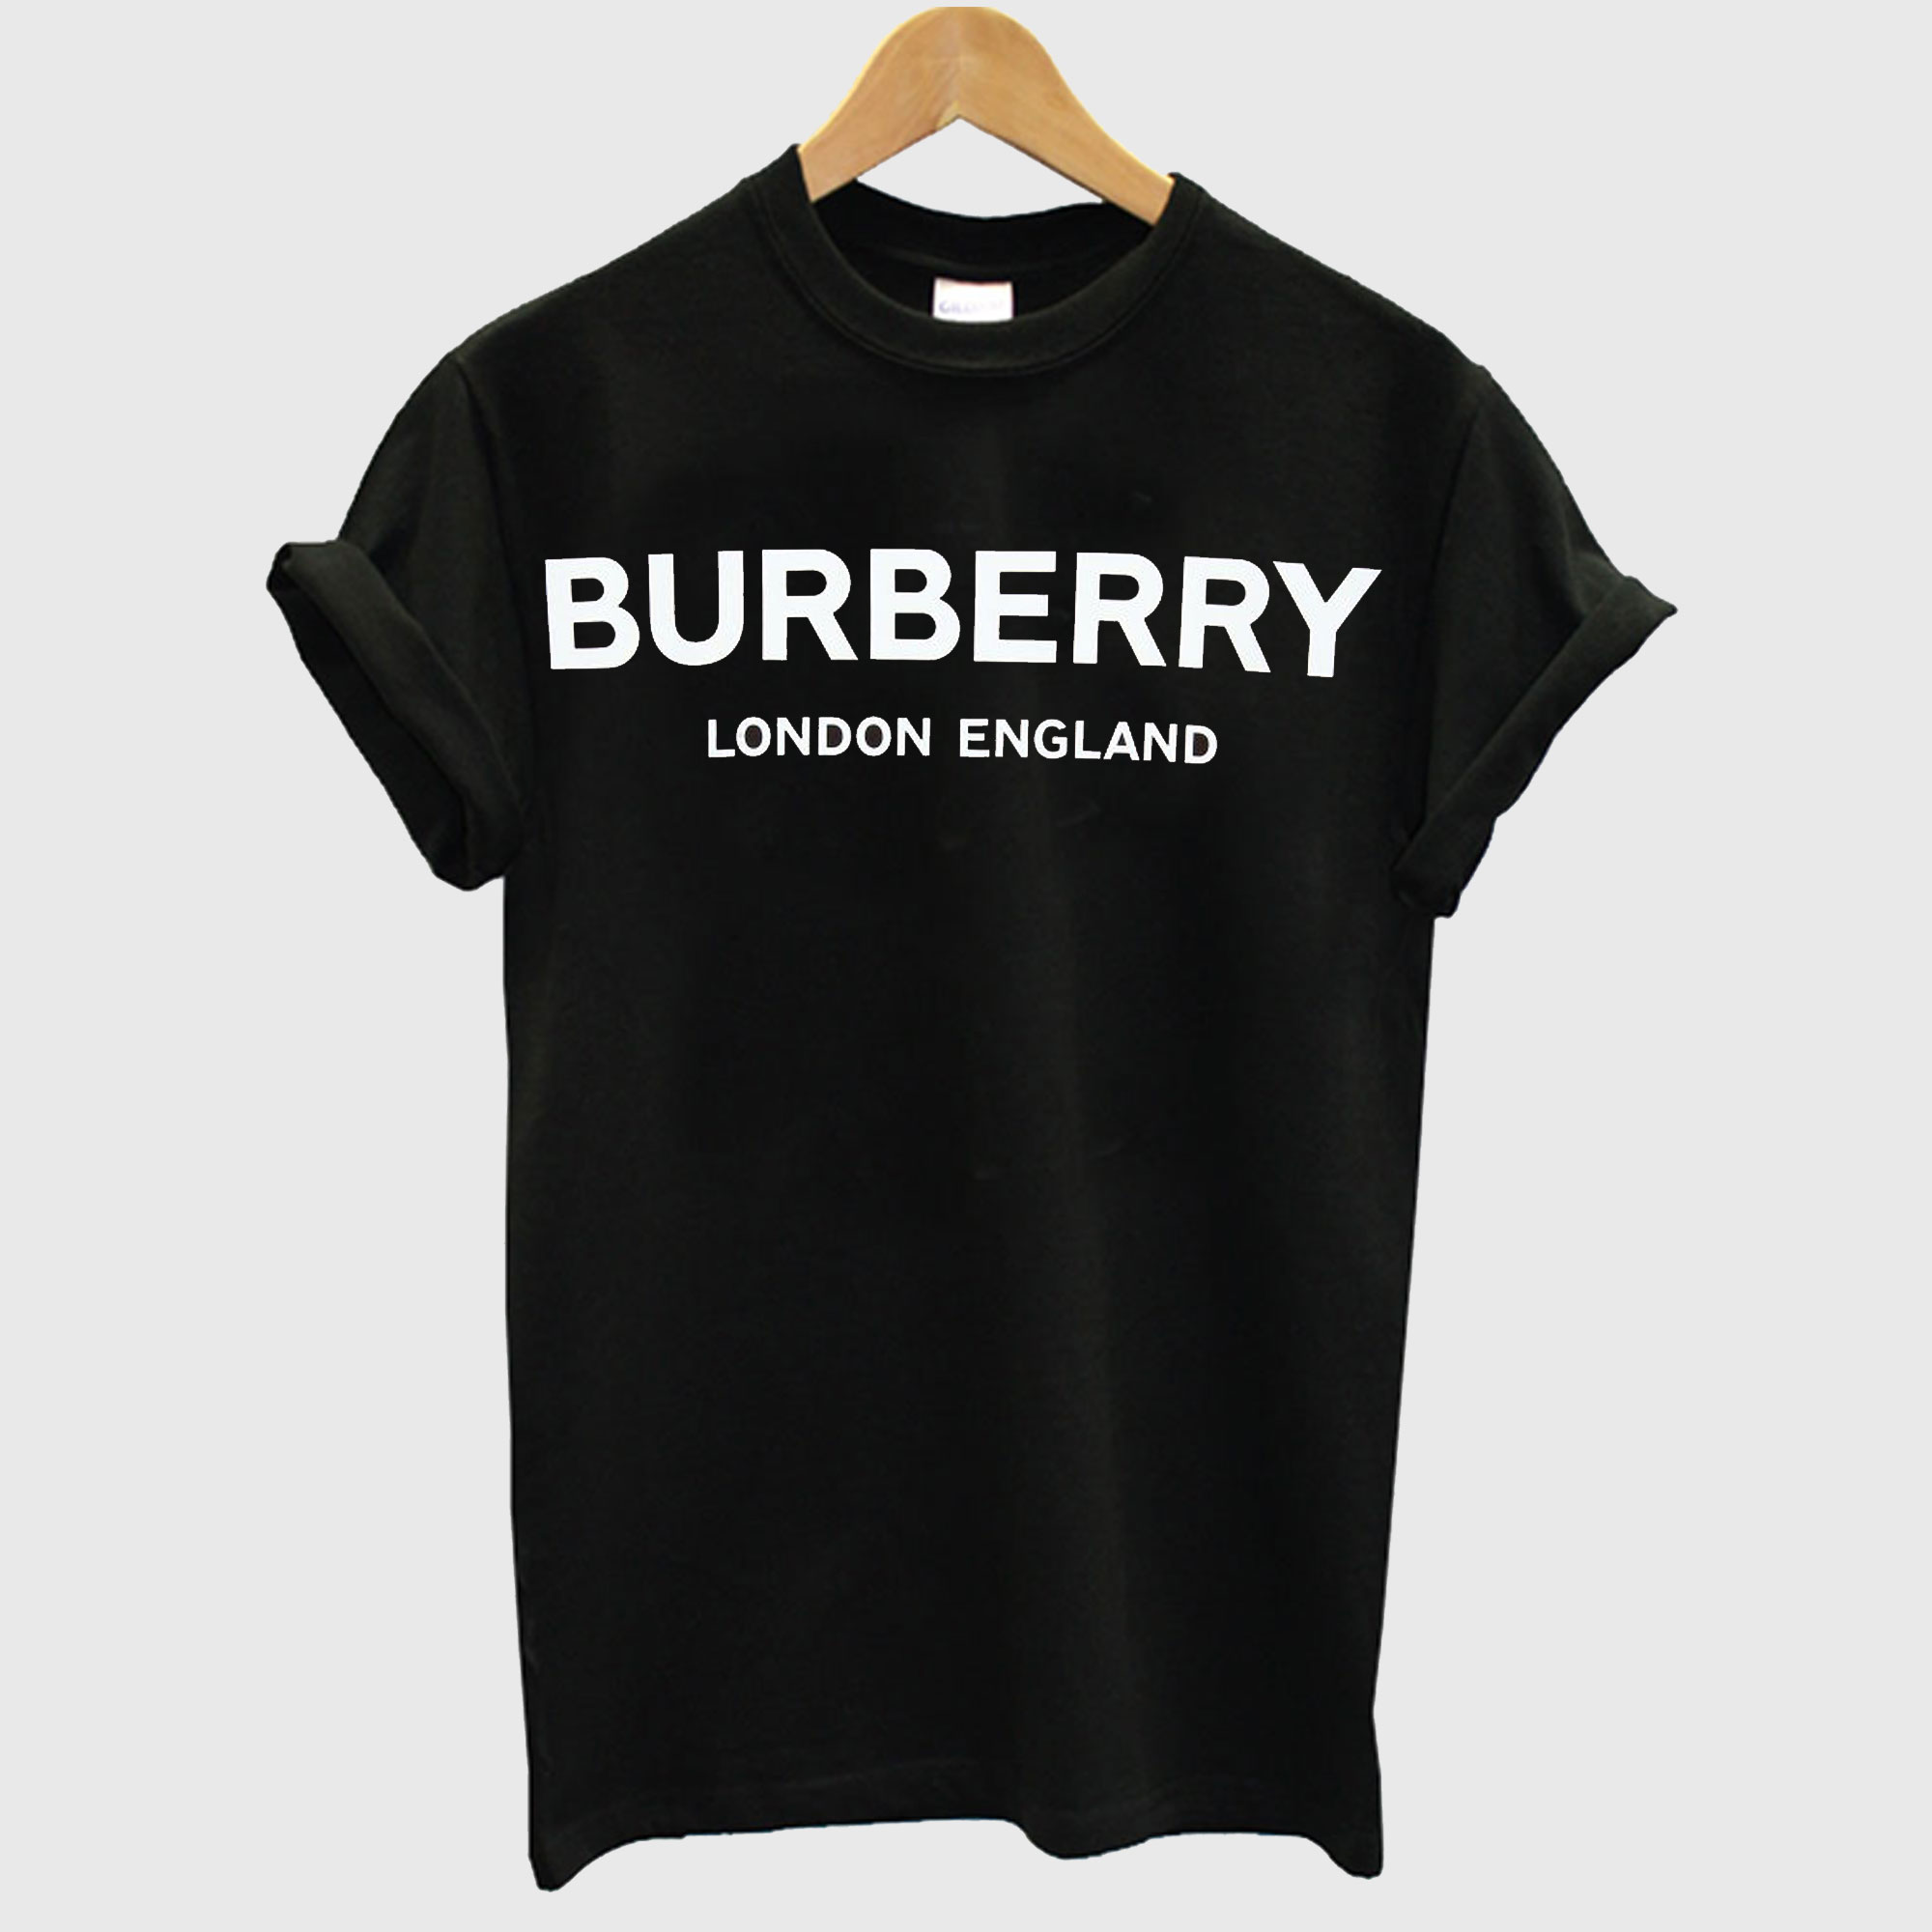 burberry england london